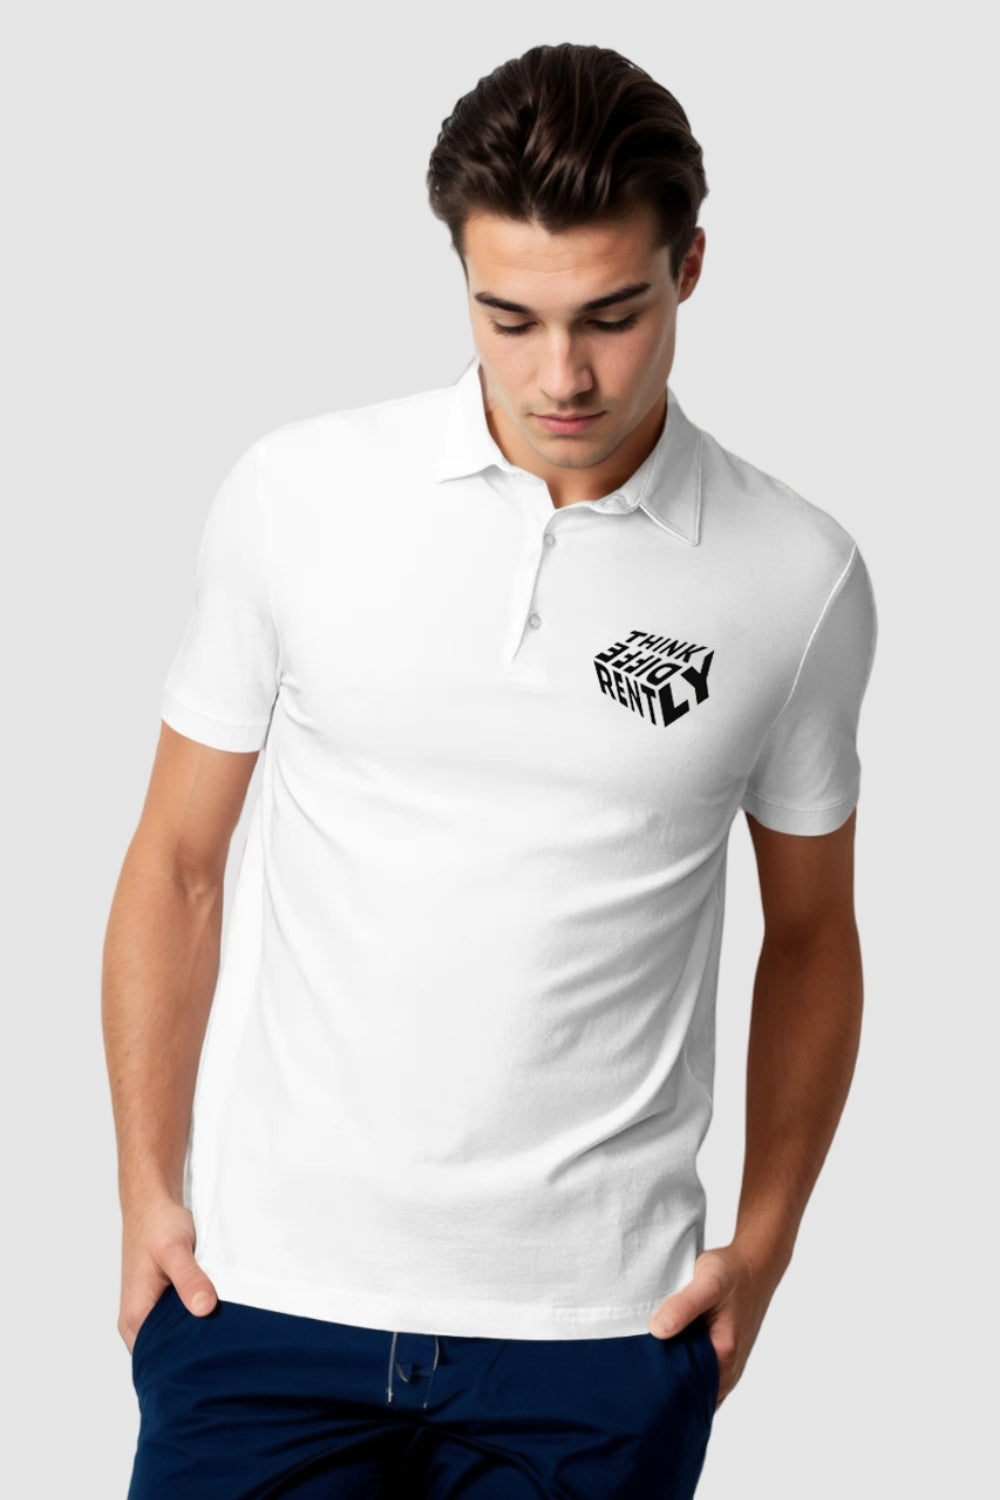 Think Differently Pocket Printed White Polo Tshirt